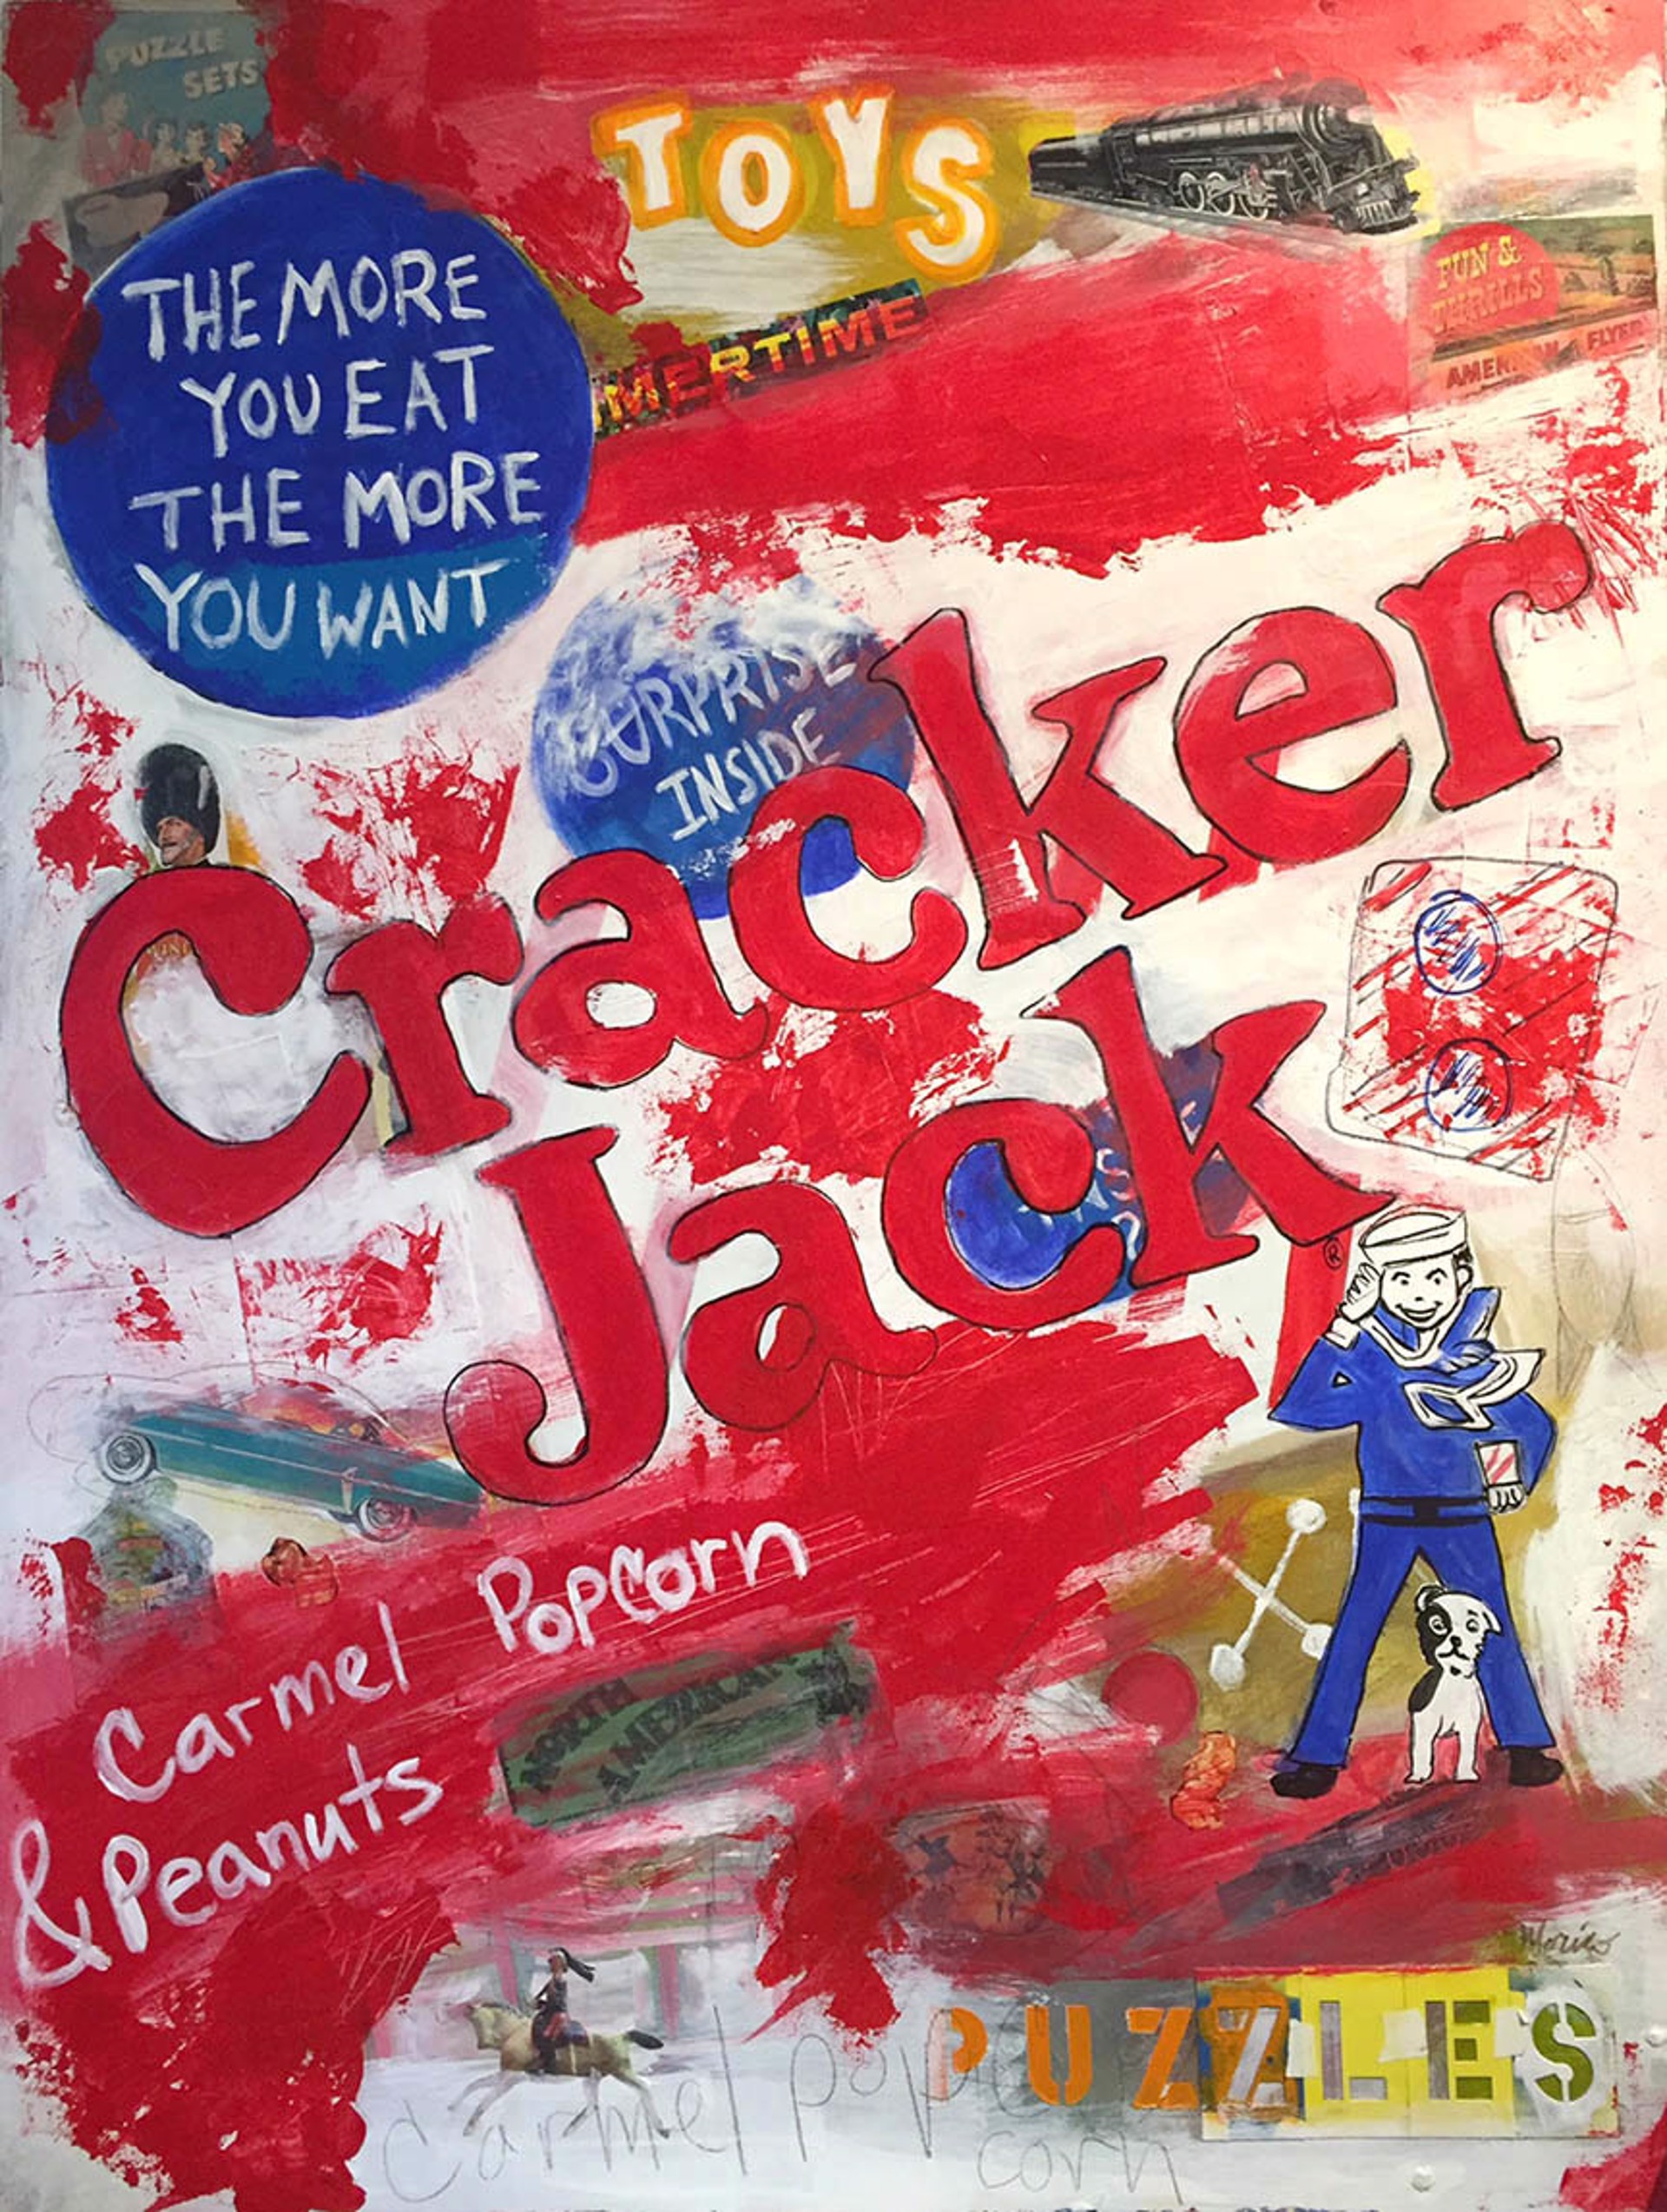 Cracker by David Morico